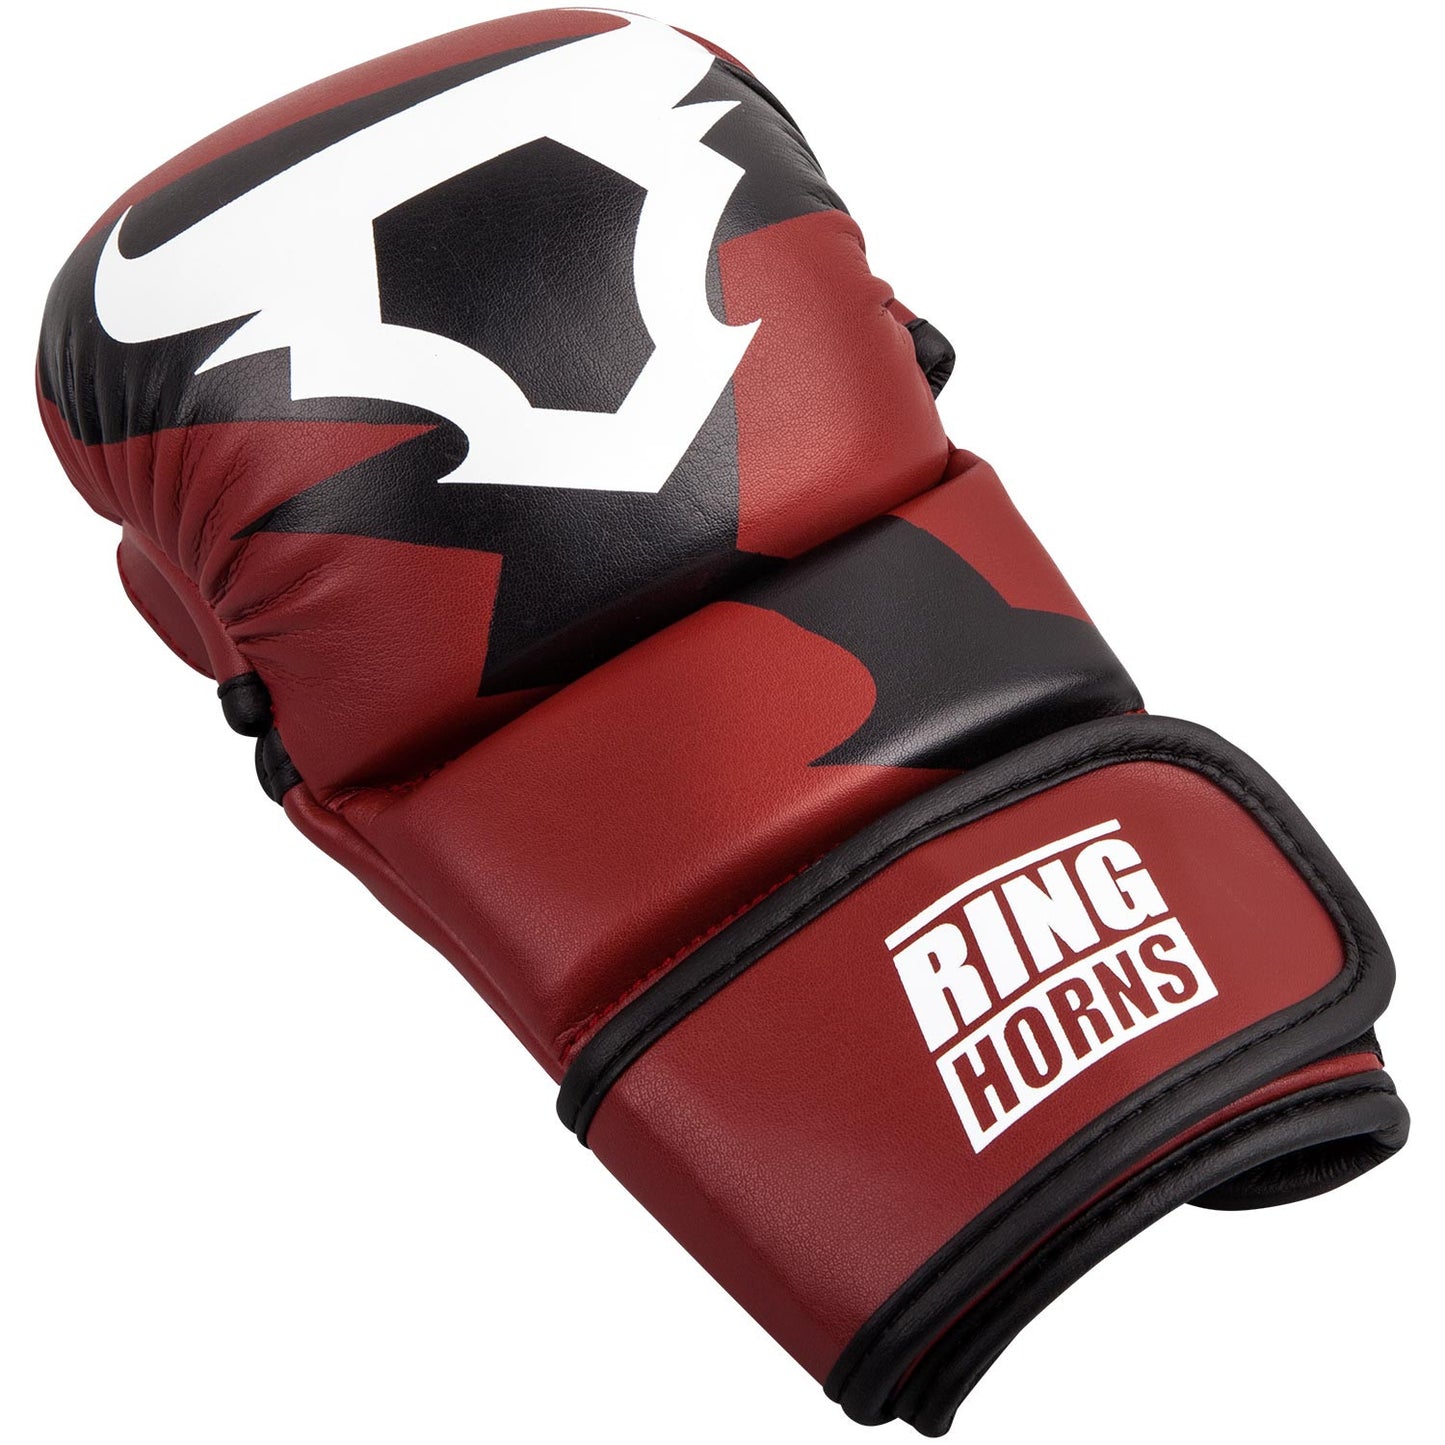 Ringhorns Charger Sparring Gloves - Red